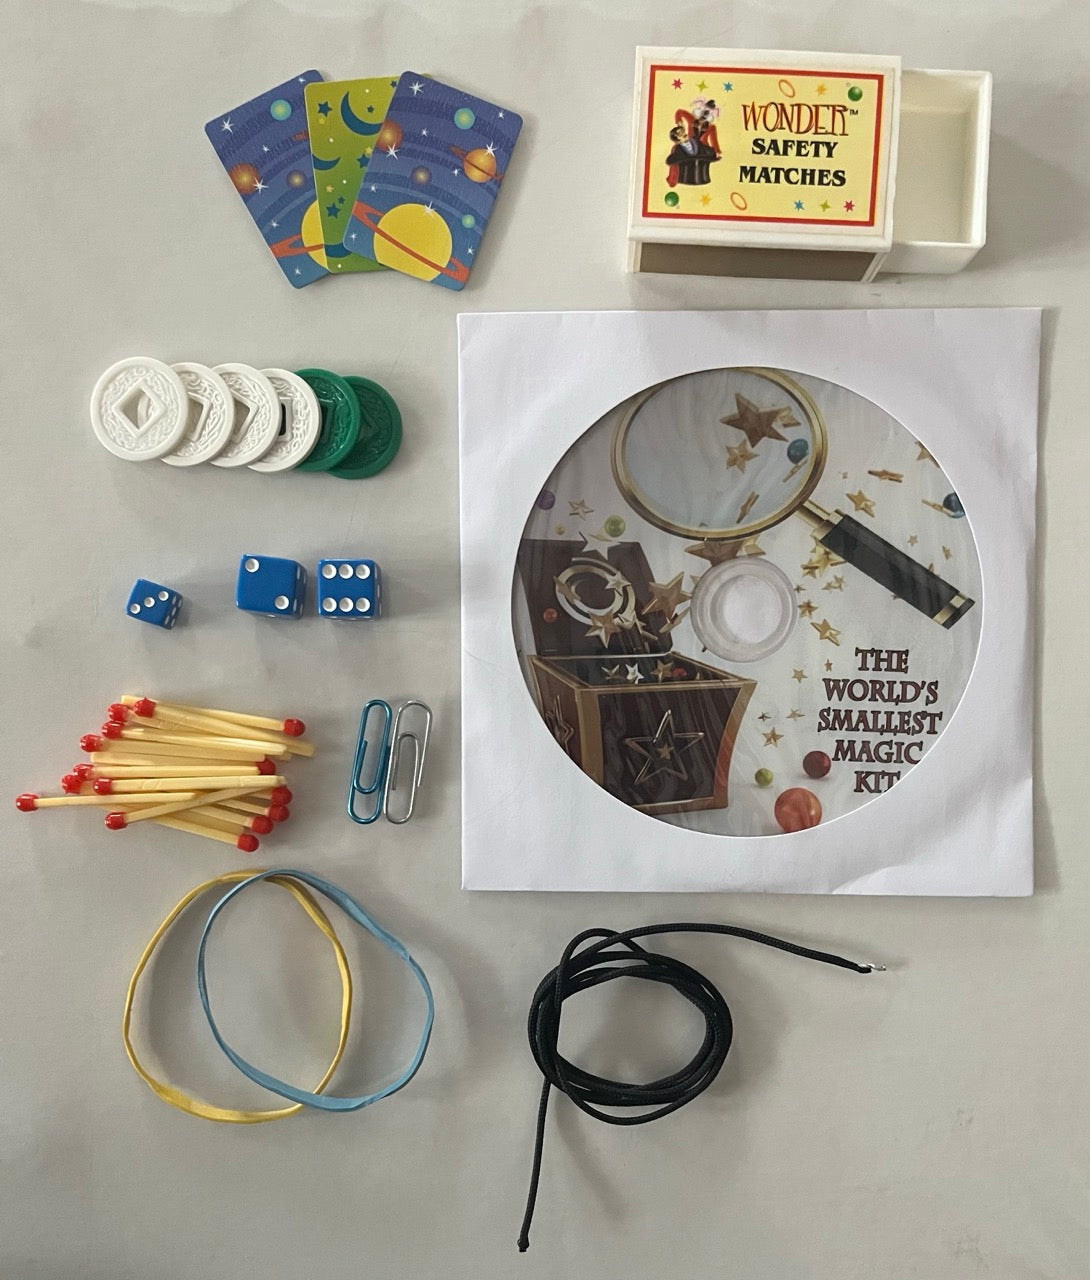 The World's Smallest Magic Kit - Don Bursell